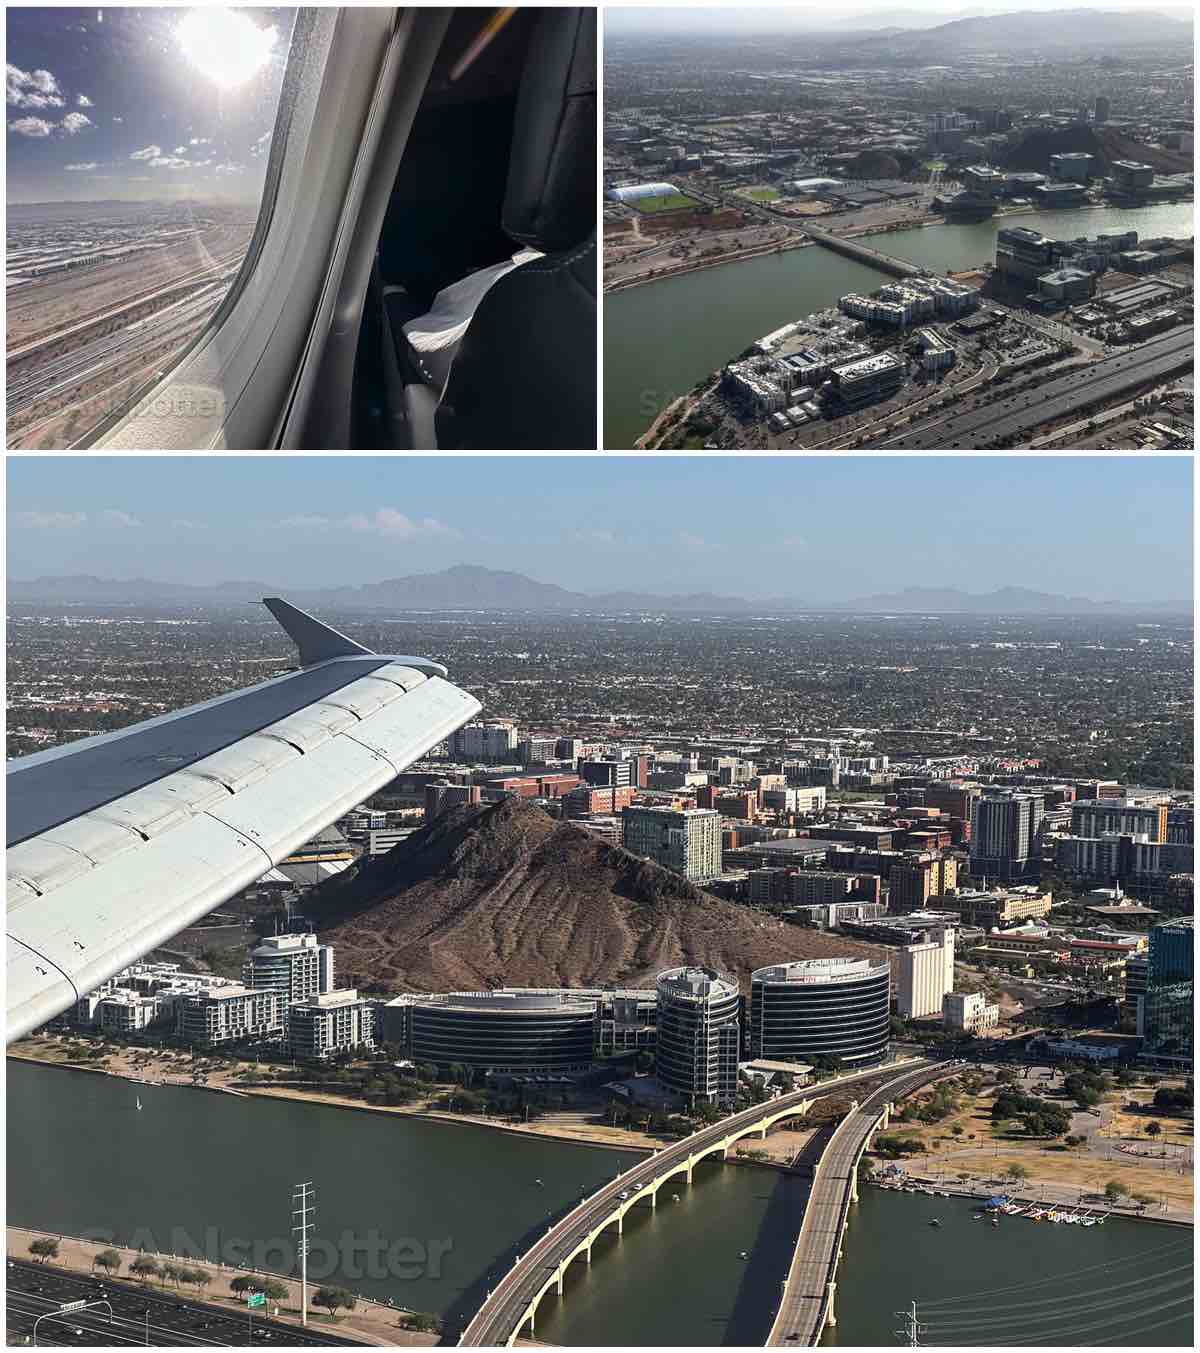 Flying over the salt river in Phoenix